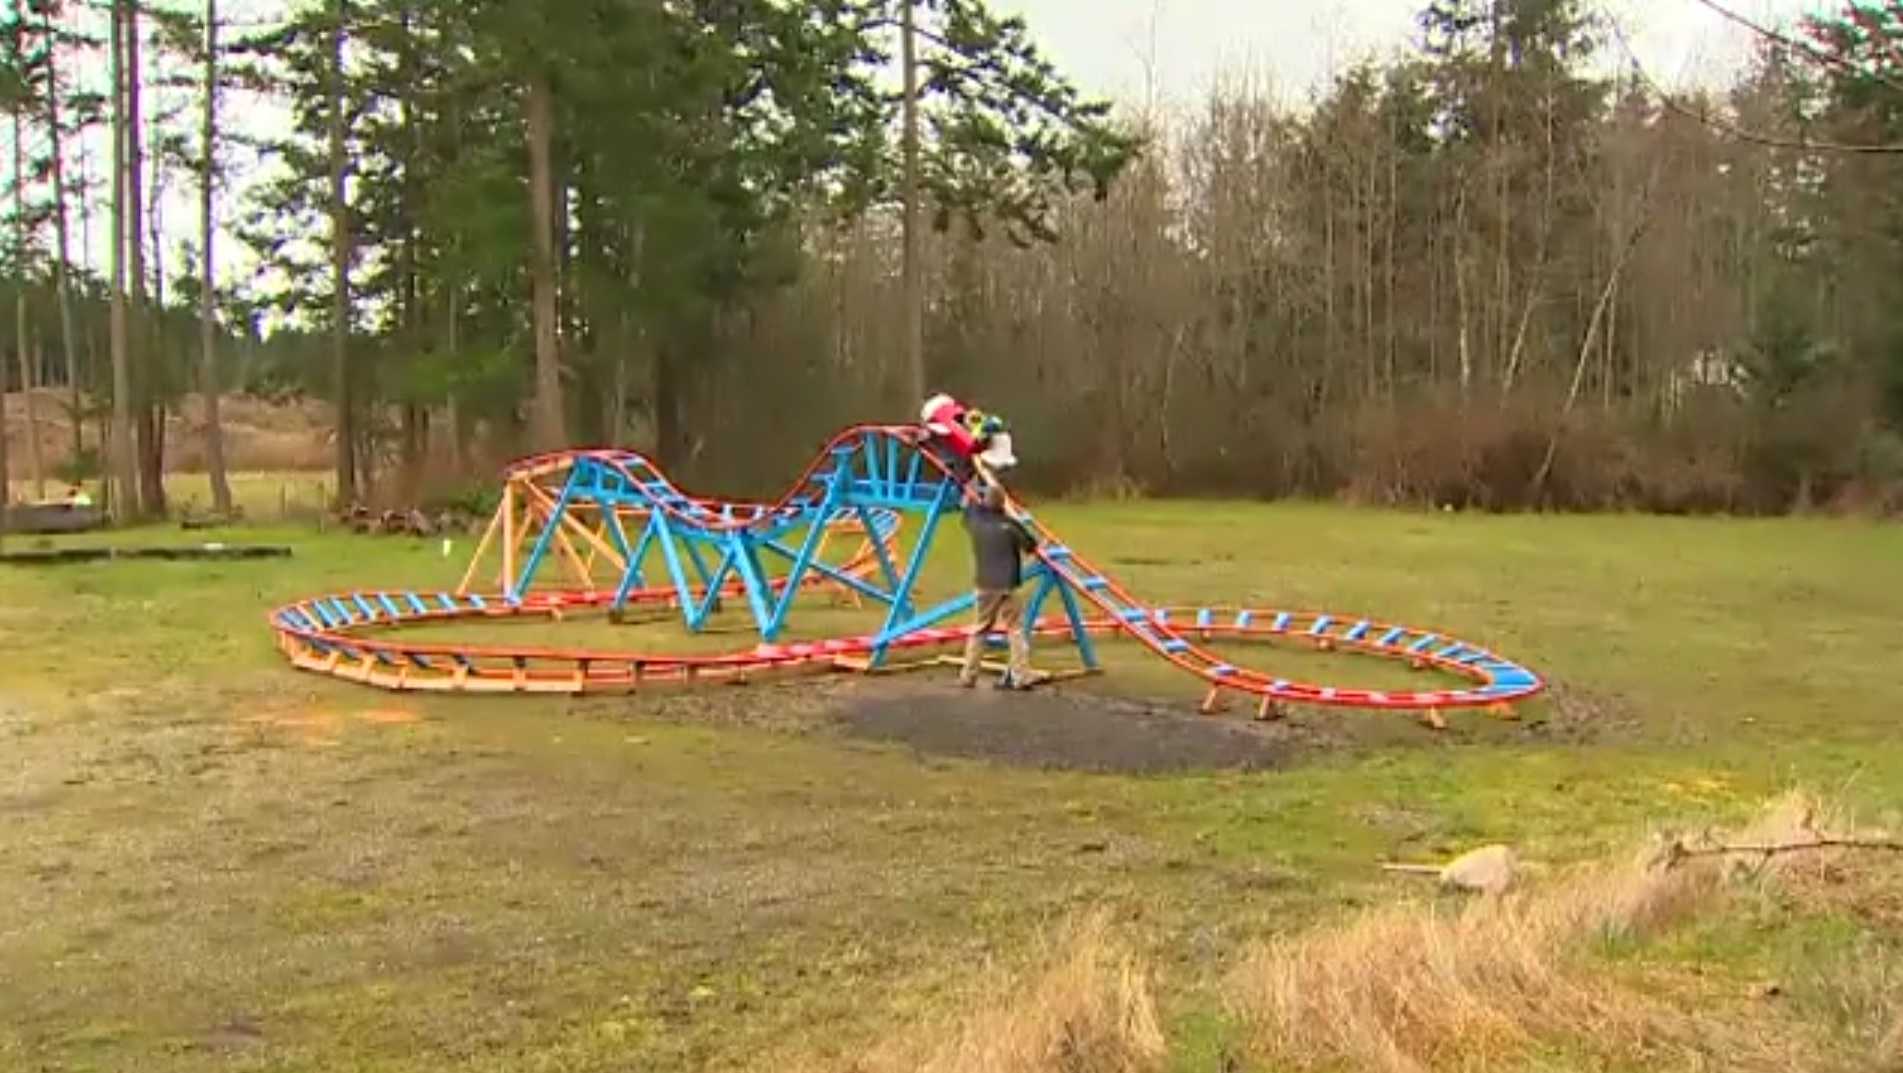 Dad builds backyard roller coaster